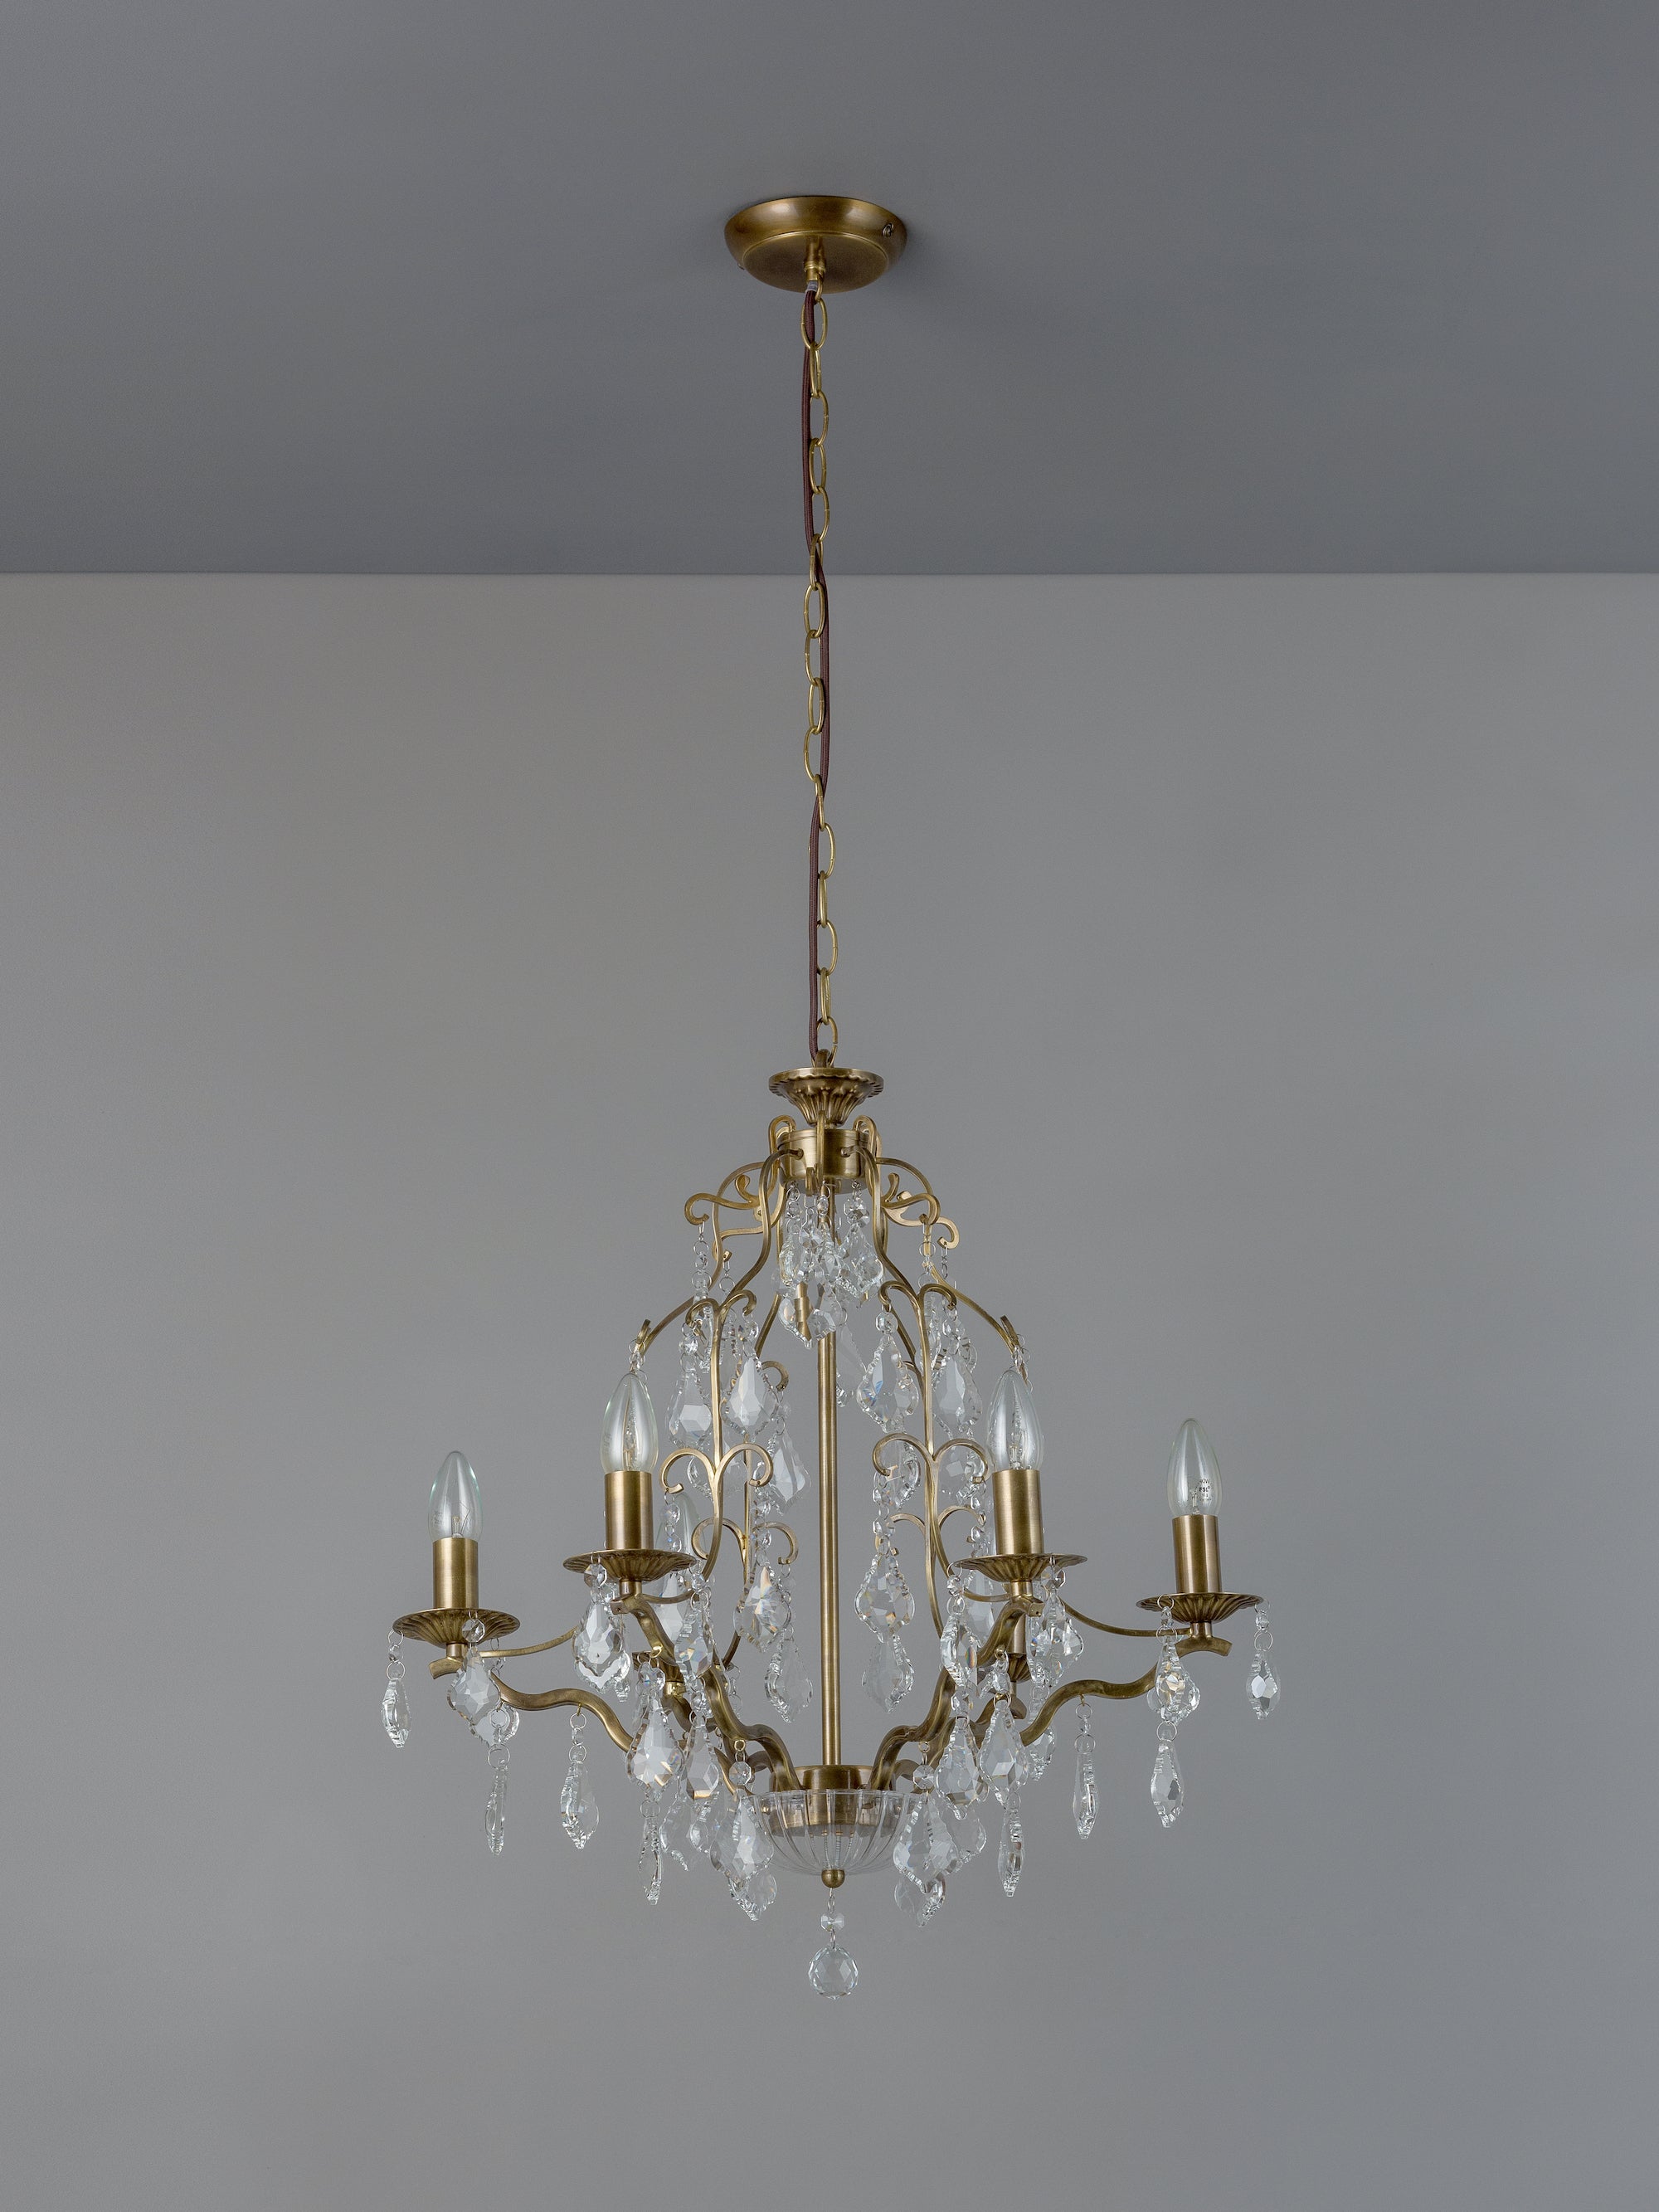 Modena - 6 light aged brass crystal glass chandelier | Ceiling Light | Lights & Lamps Inc | Modern Affordable Designer Lighting | USA